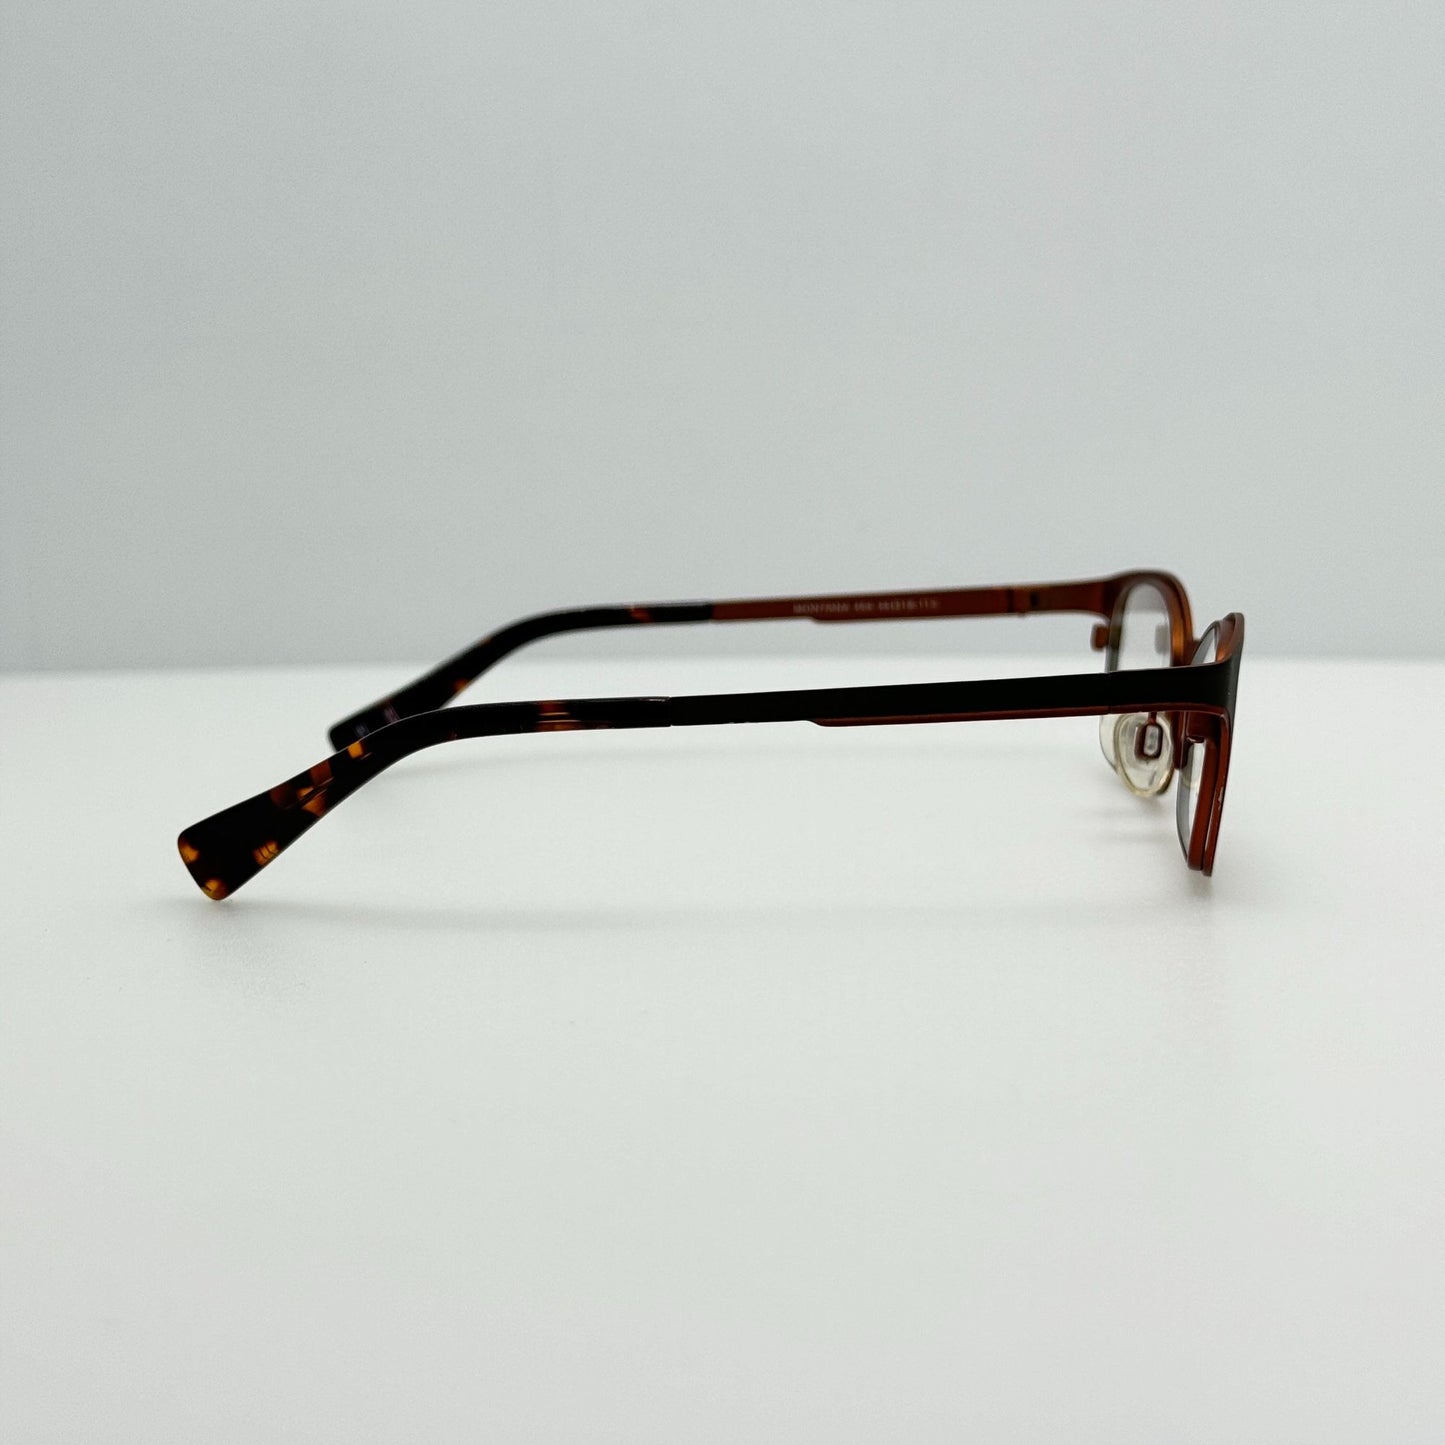 Jean Lafont Eyeglasses Eye Glasses Frames Montana 454 France 44-18-113